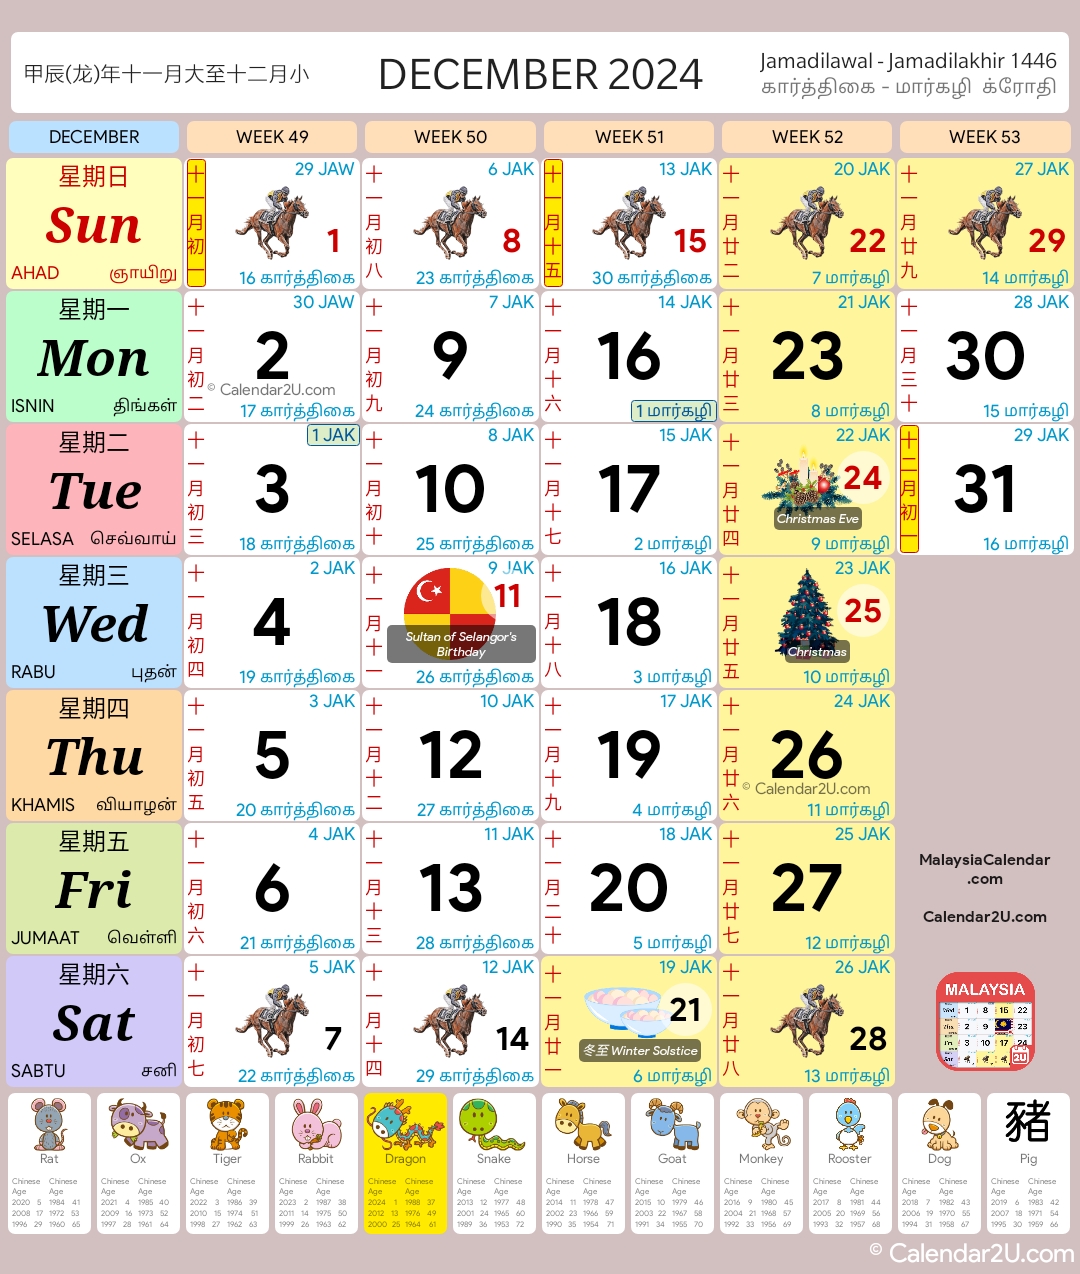 kalendar malaysia calendar dec 2024